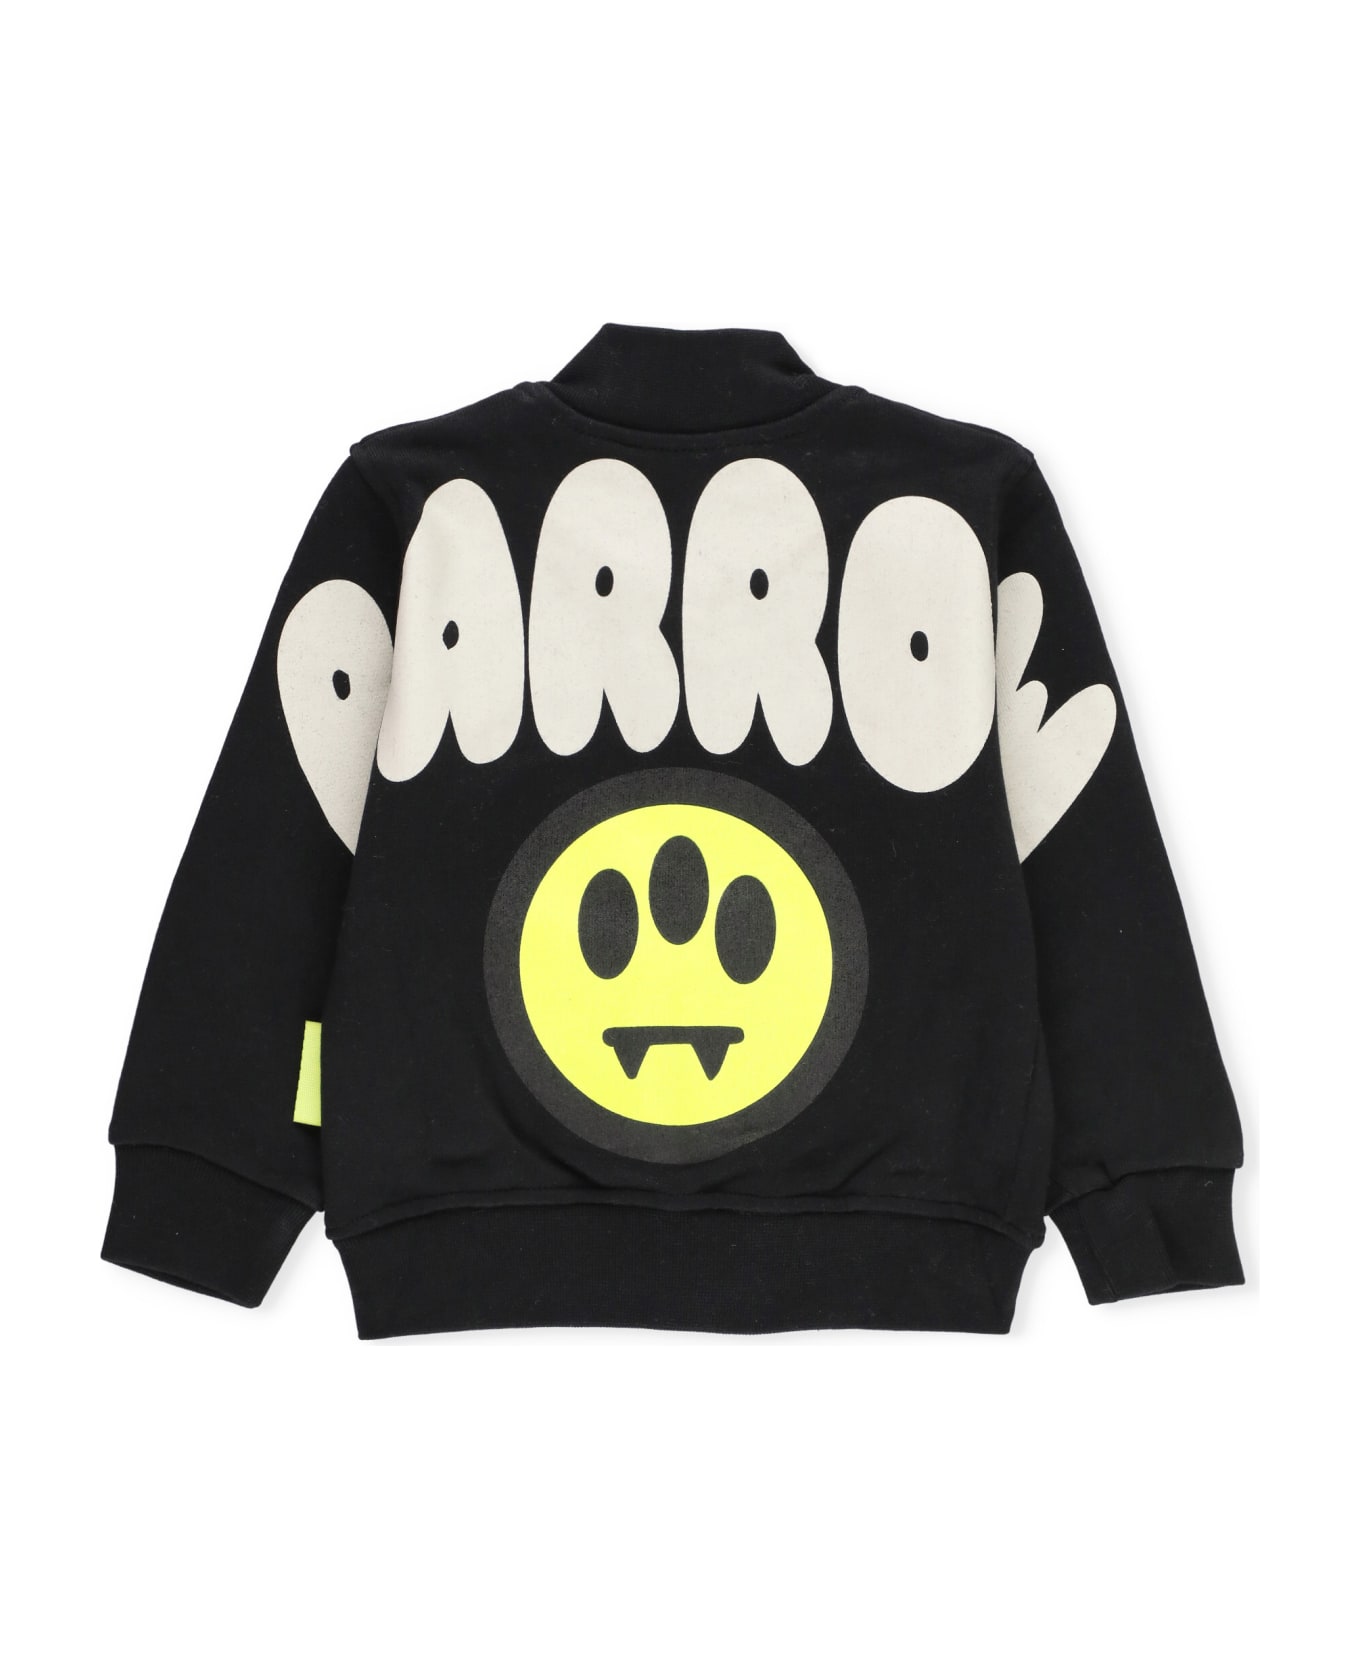 Barrow Sweatshirt With Logo - Black ニットウェア＆スウェットシャツ